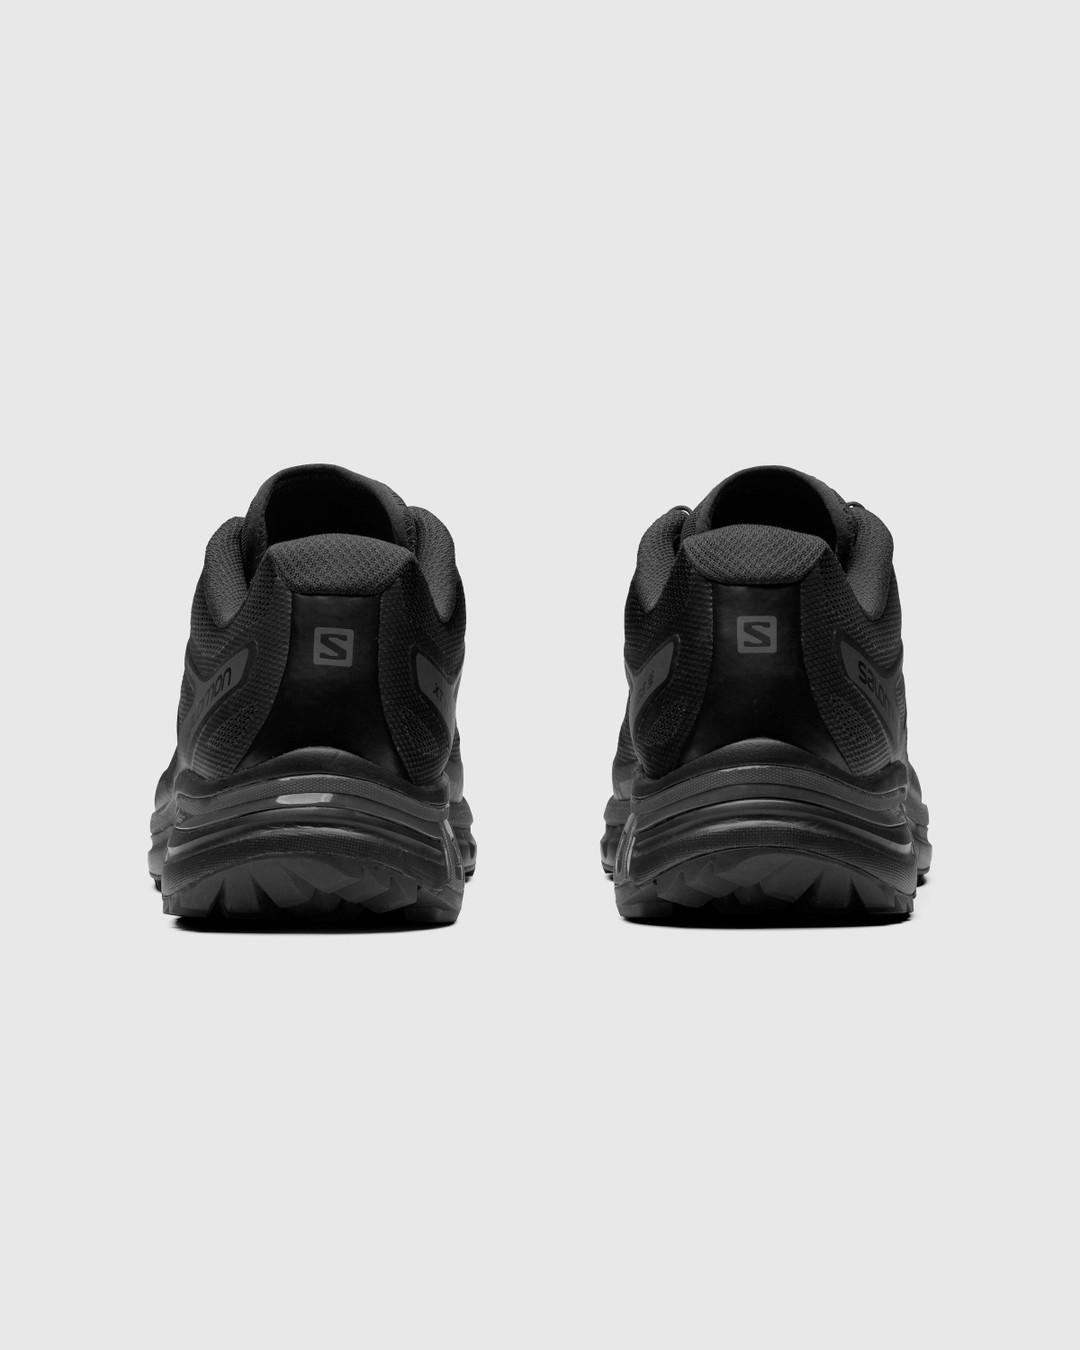 Salomon – XT-Wings 2 Advanced Black/Black/Magnet - Low Top Sneakers - Black - Image 4